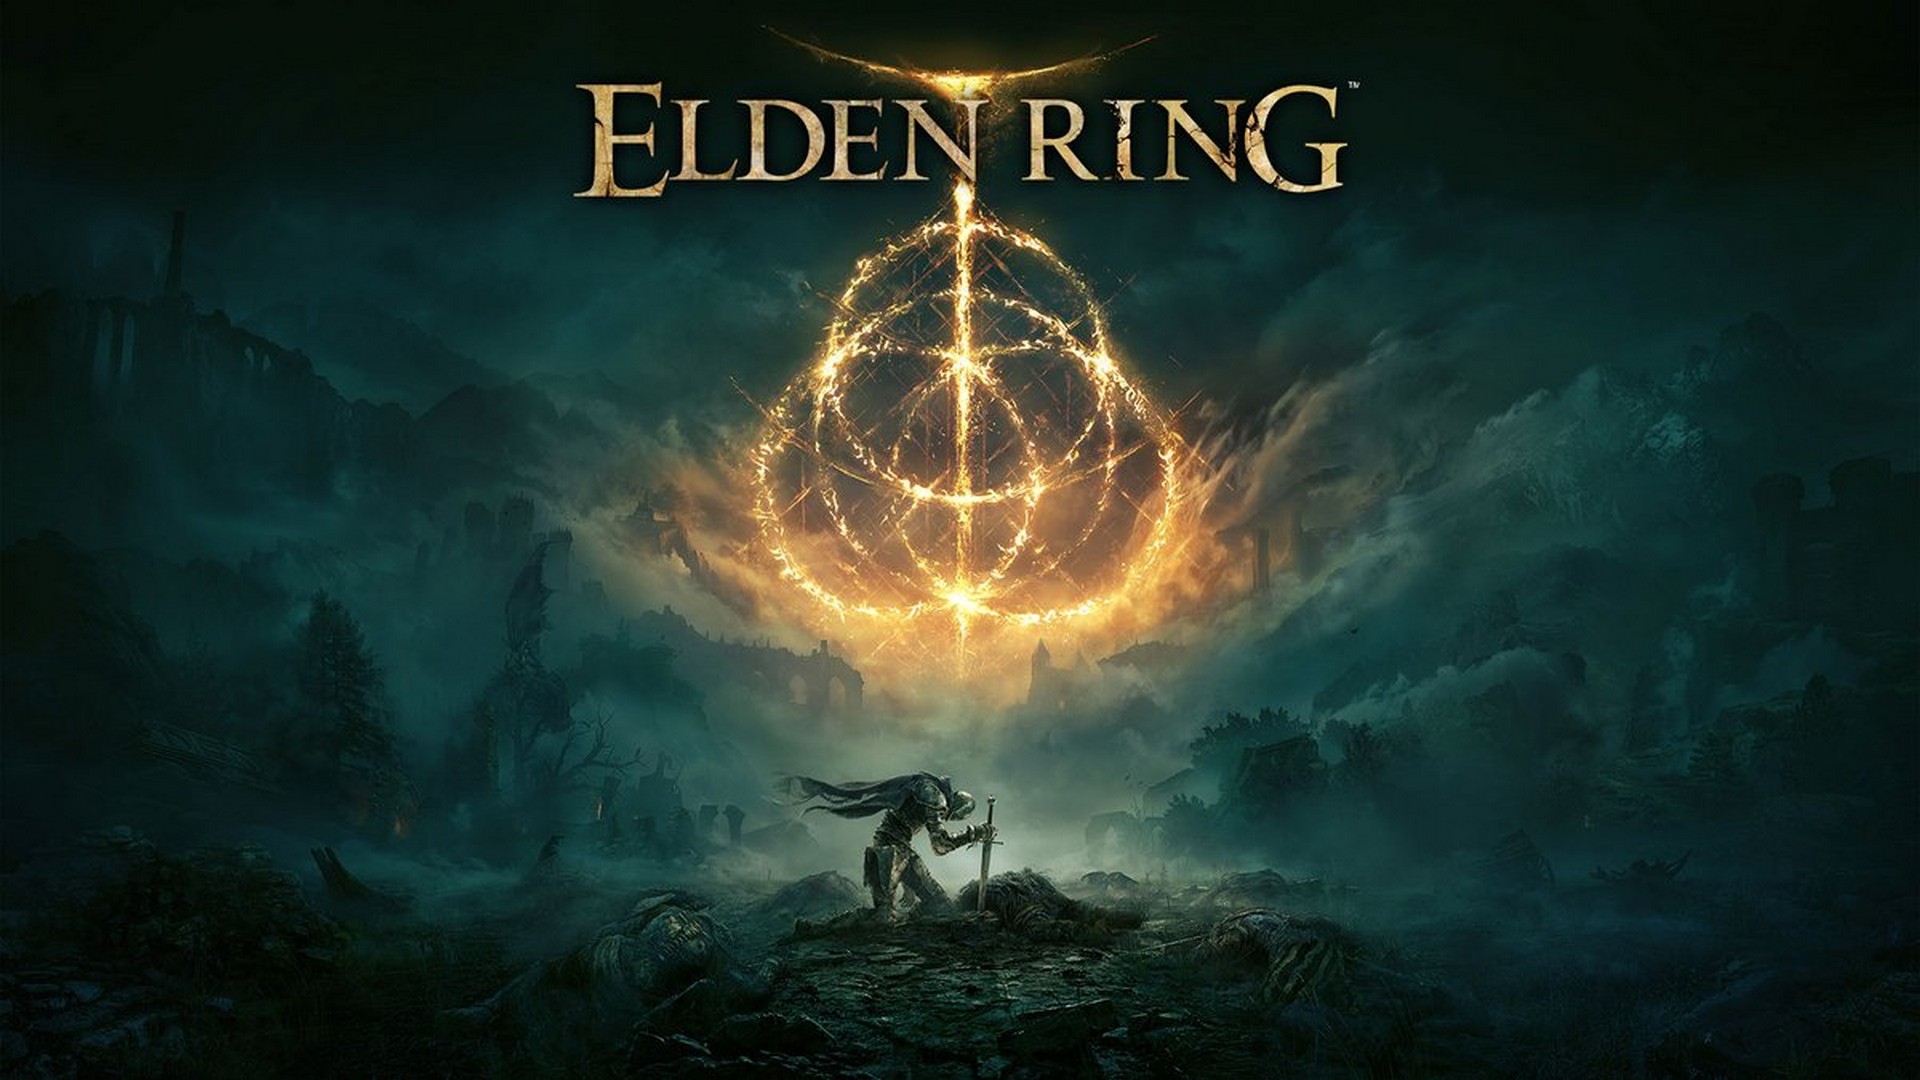 Award Winning Action-RPG “Elden Ring” Sold 20 Million Units Worldwide